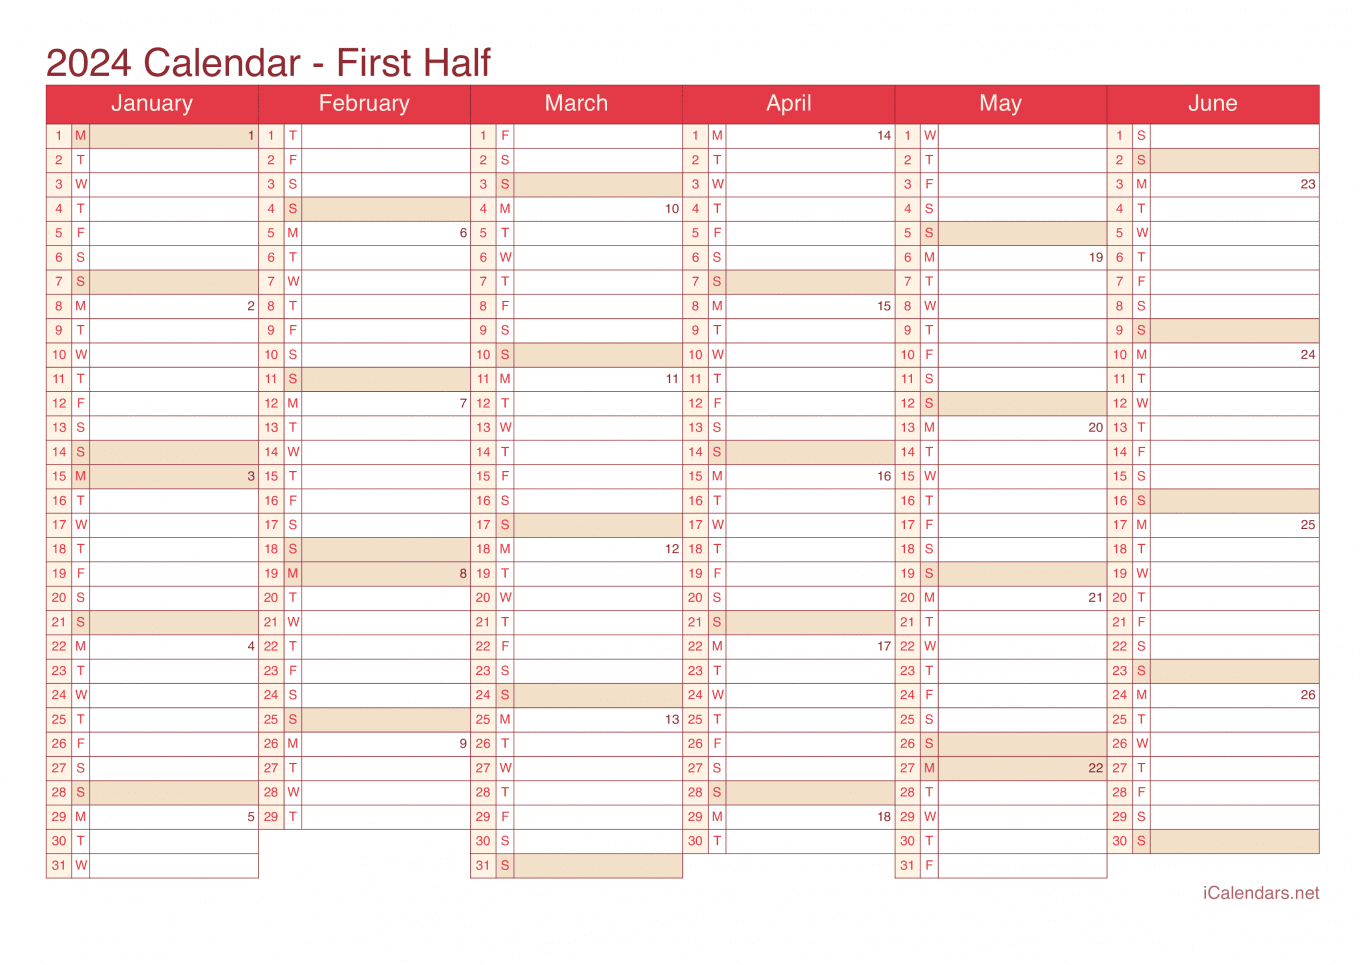 2024 Half year calendar with week numbers - Cherry